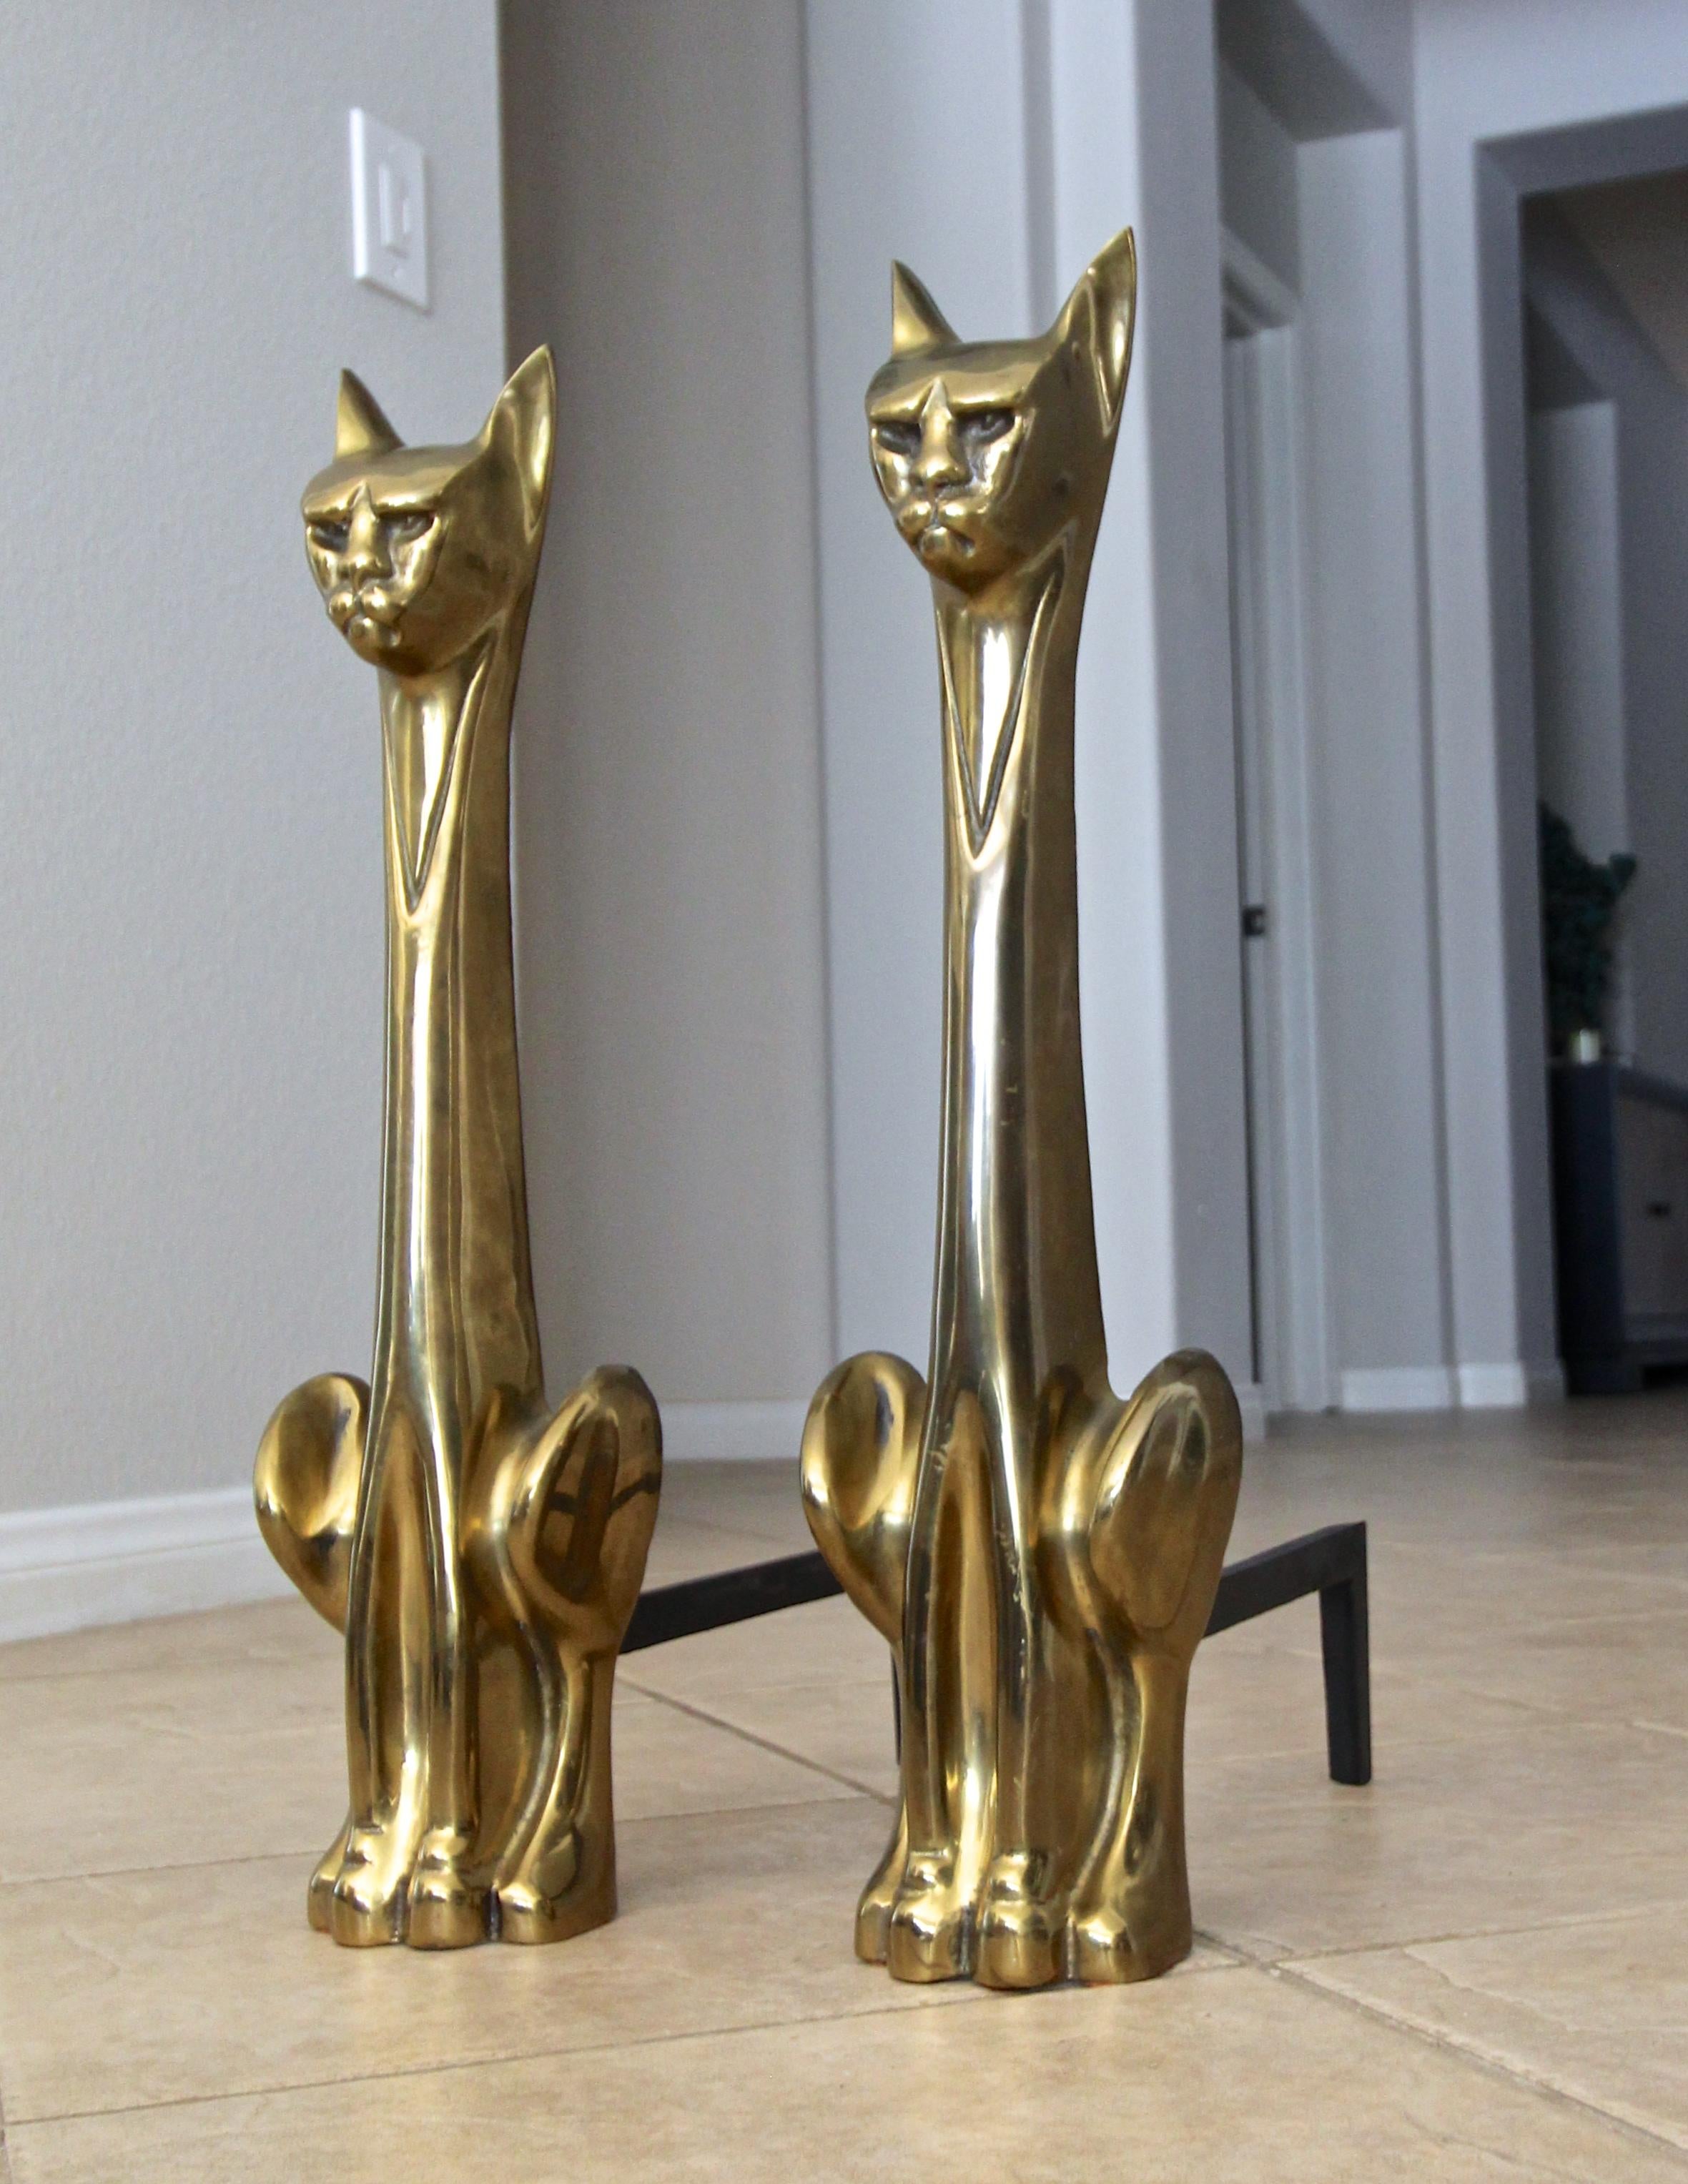 Pair of Tall Stylized Siamese Cat Midcentury Brass Andirons 1